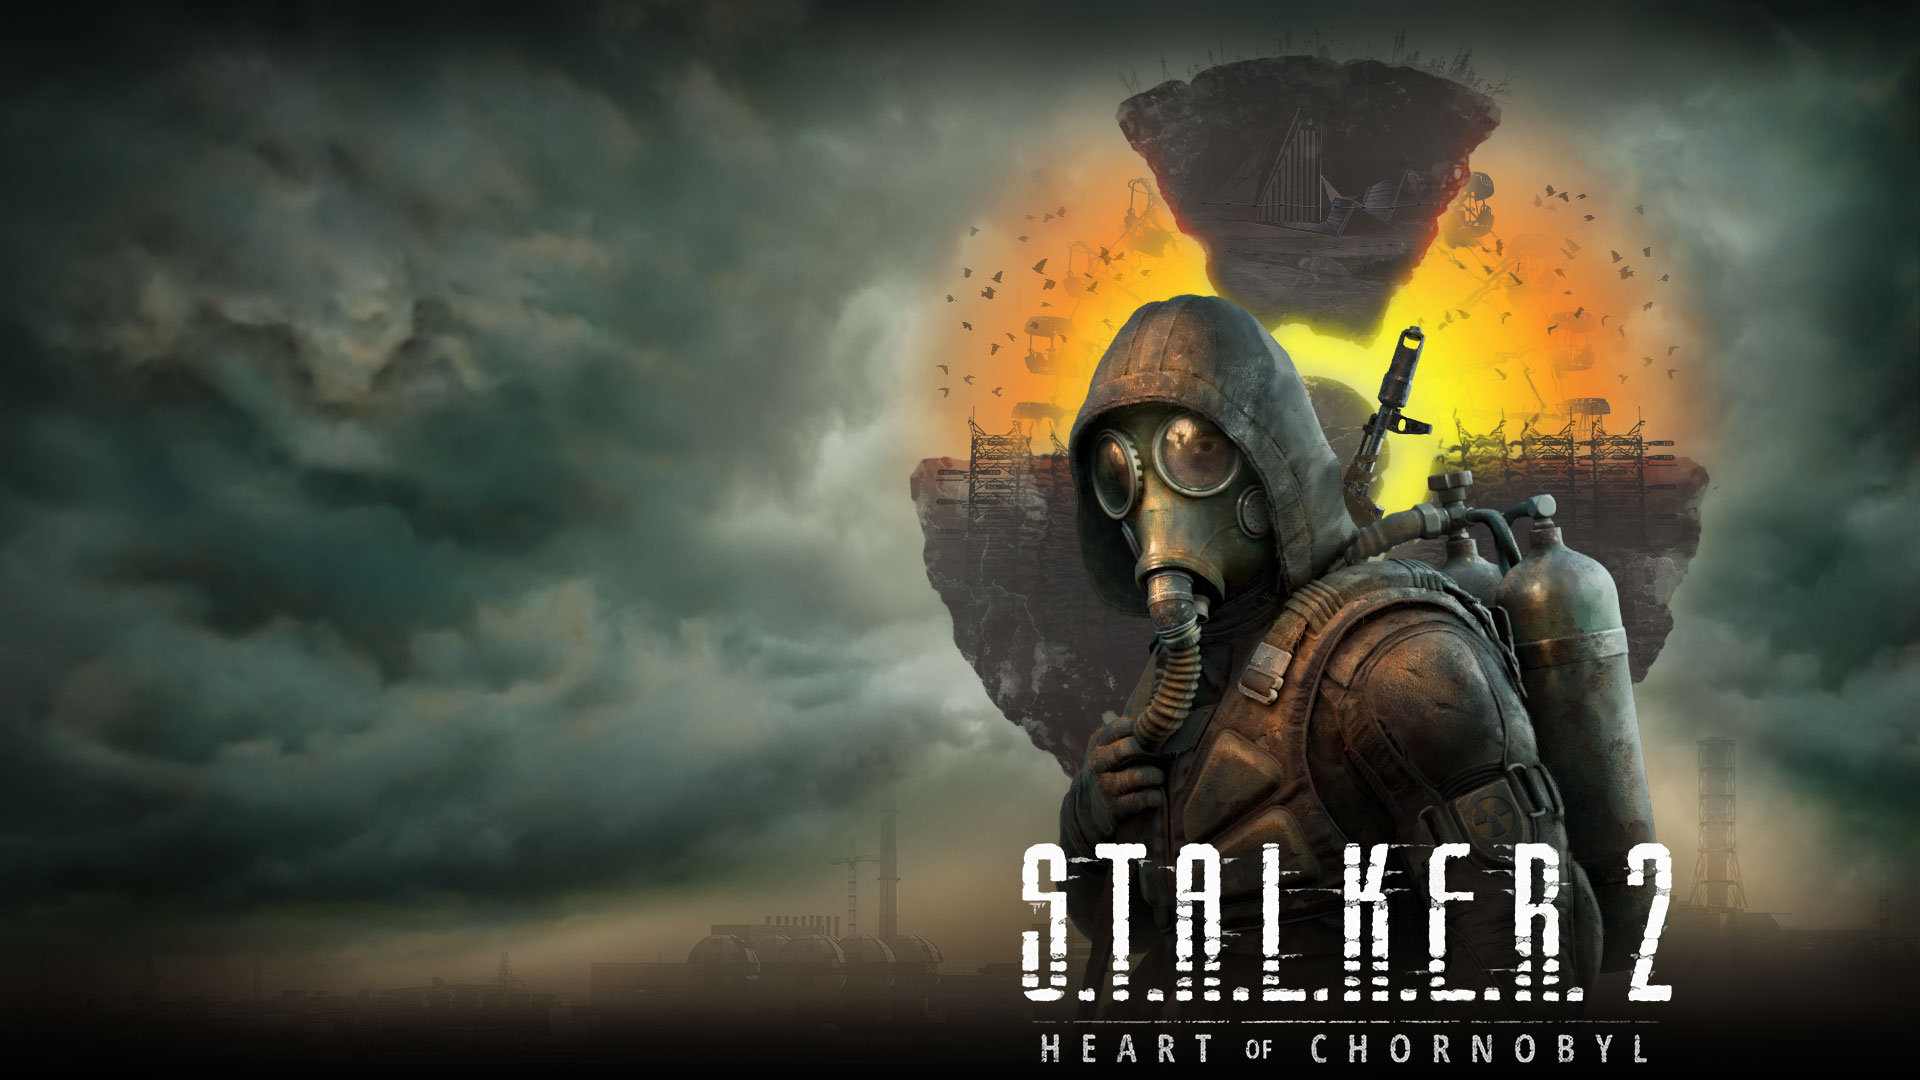 『S.T.A.L.K.E.R. 2: Heart of Chornobyl』、空には雲と煙が漂い、宙に浮かぶ大地の前に立つキャラクター。